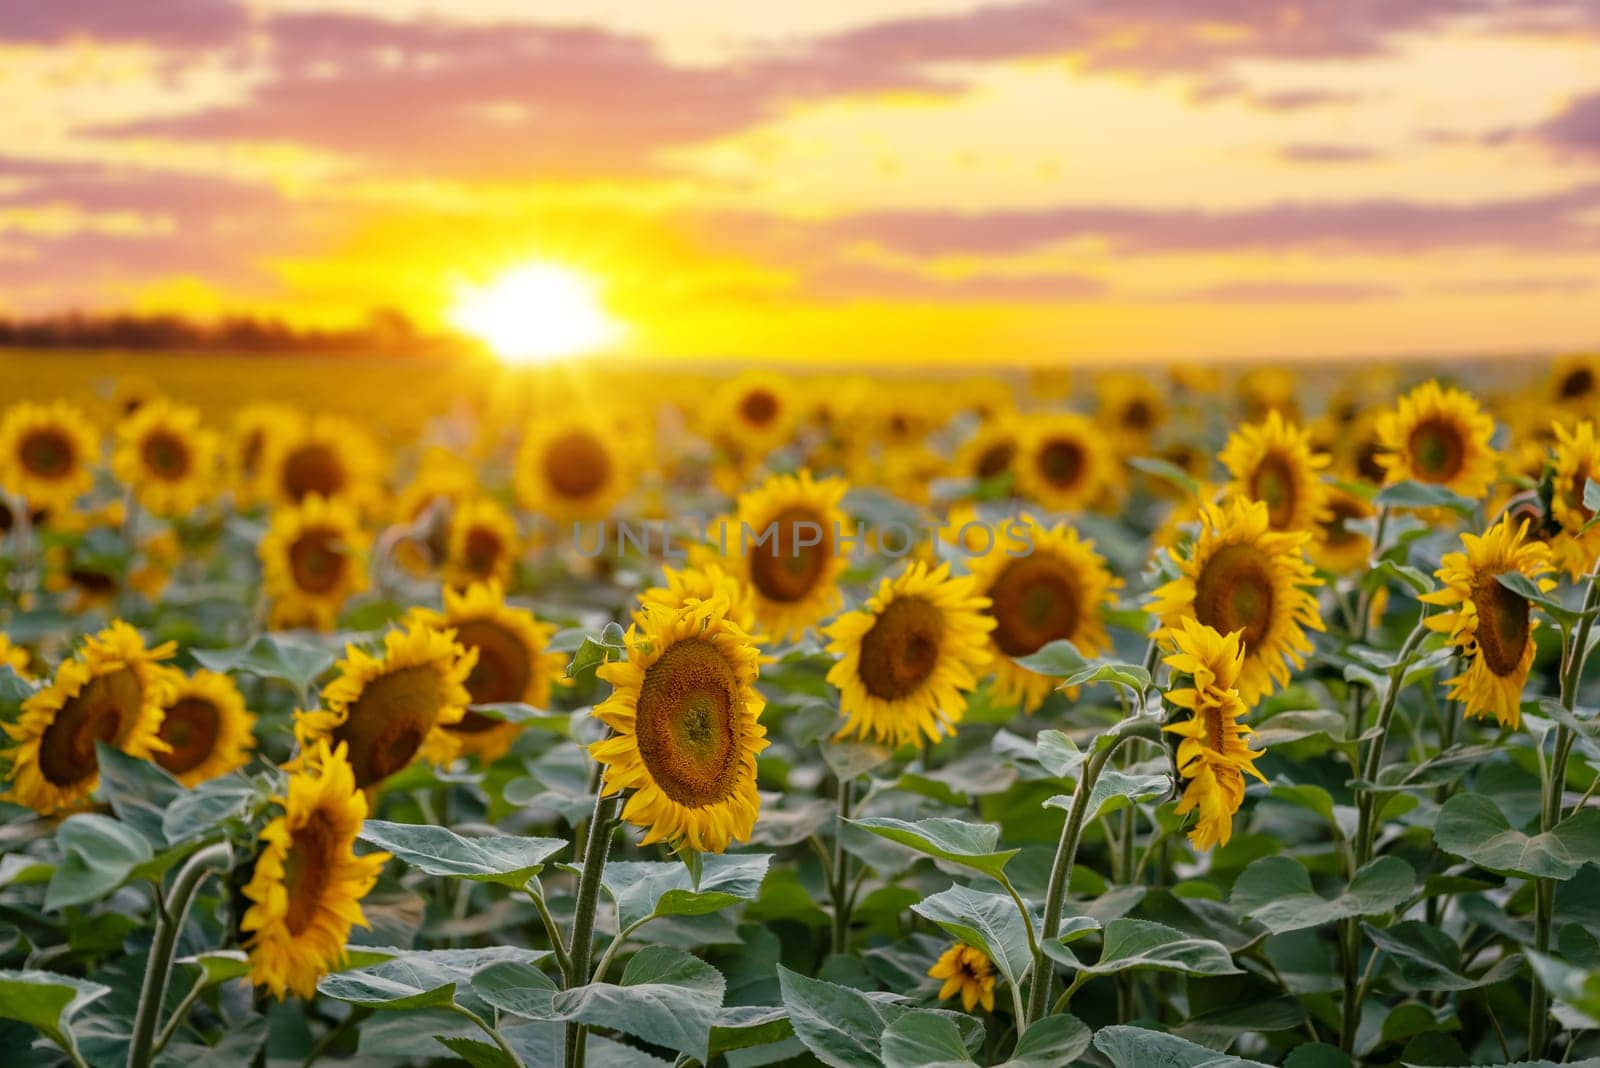 Gorgeous golden sunset over the sunflower field by VitaliiPetrushenko